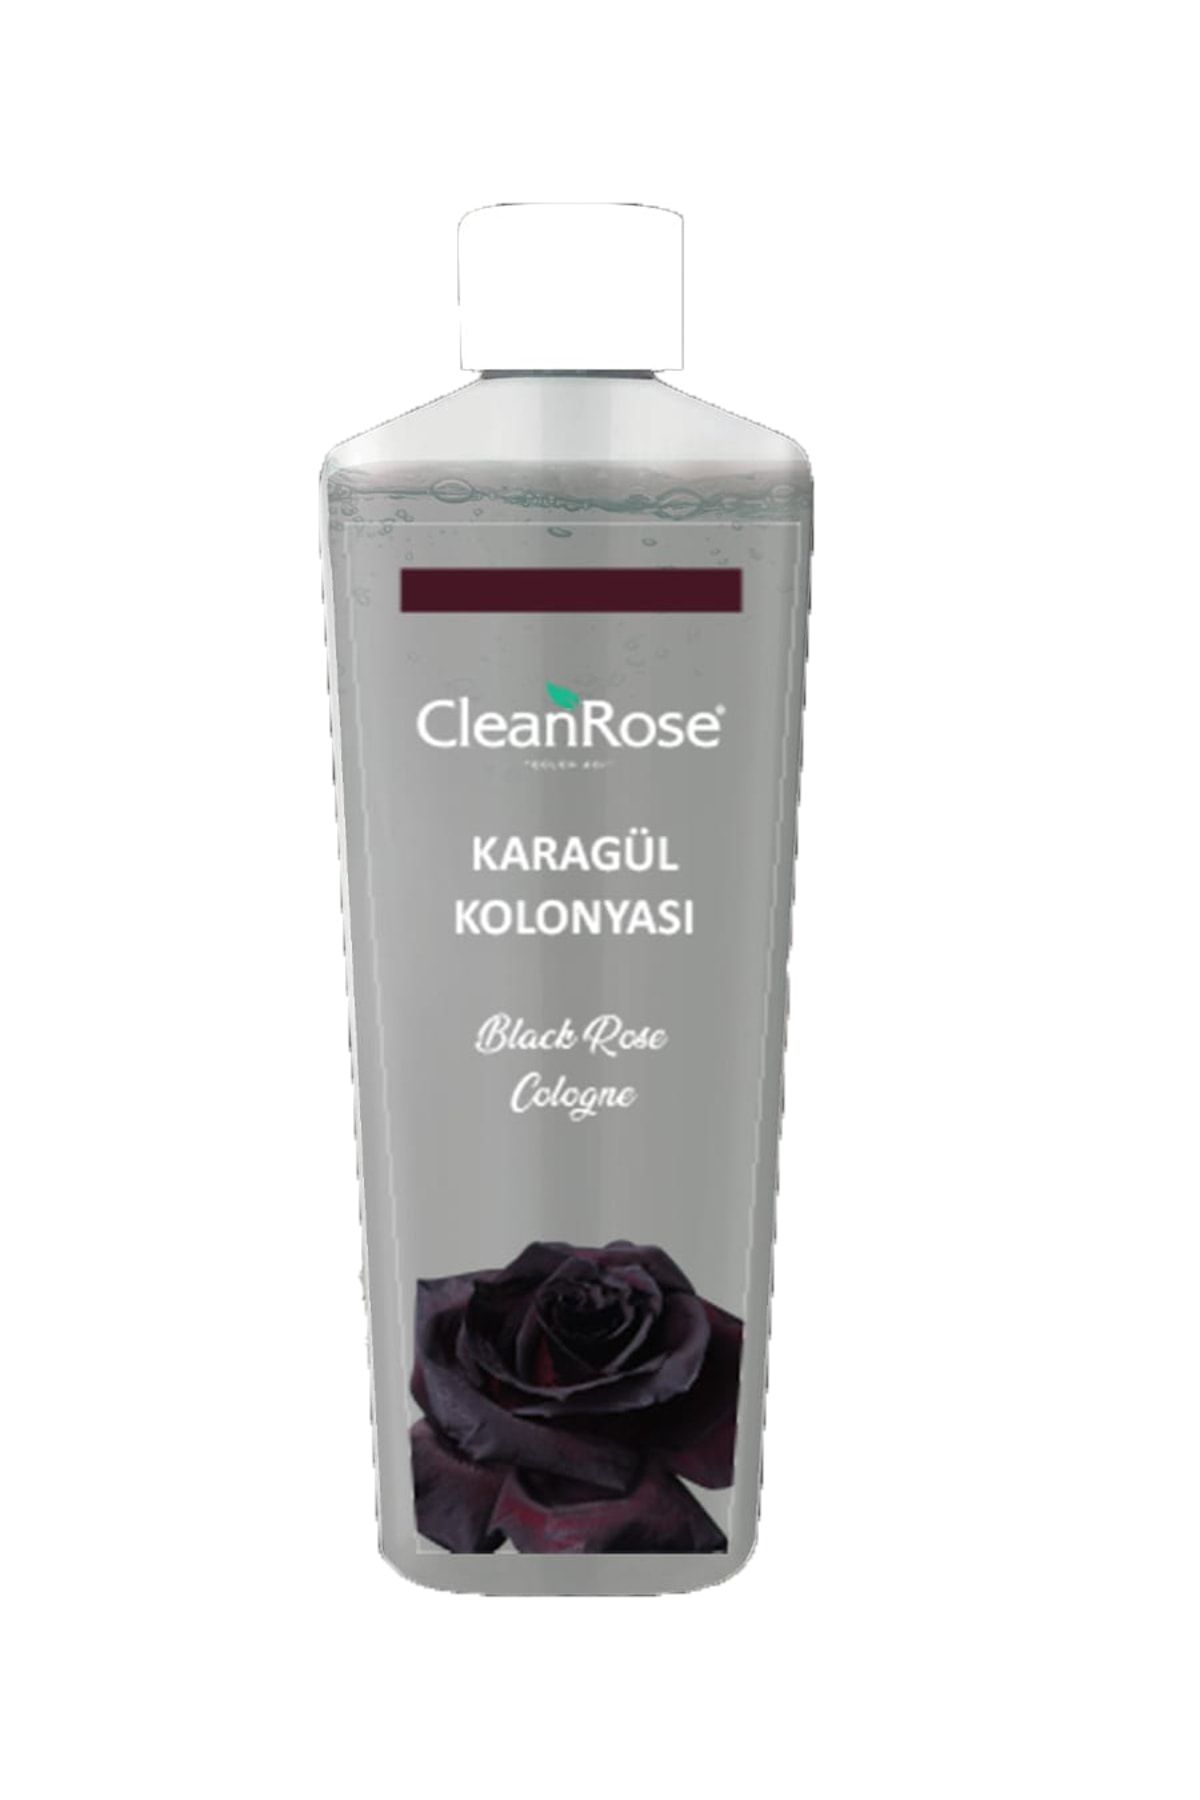 Clean Rose Efsane Karagül Kolonya 250 ml